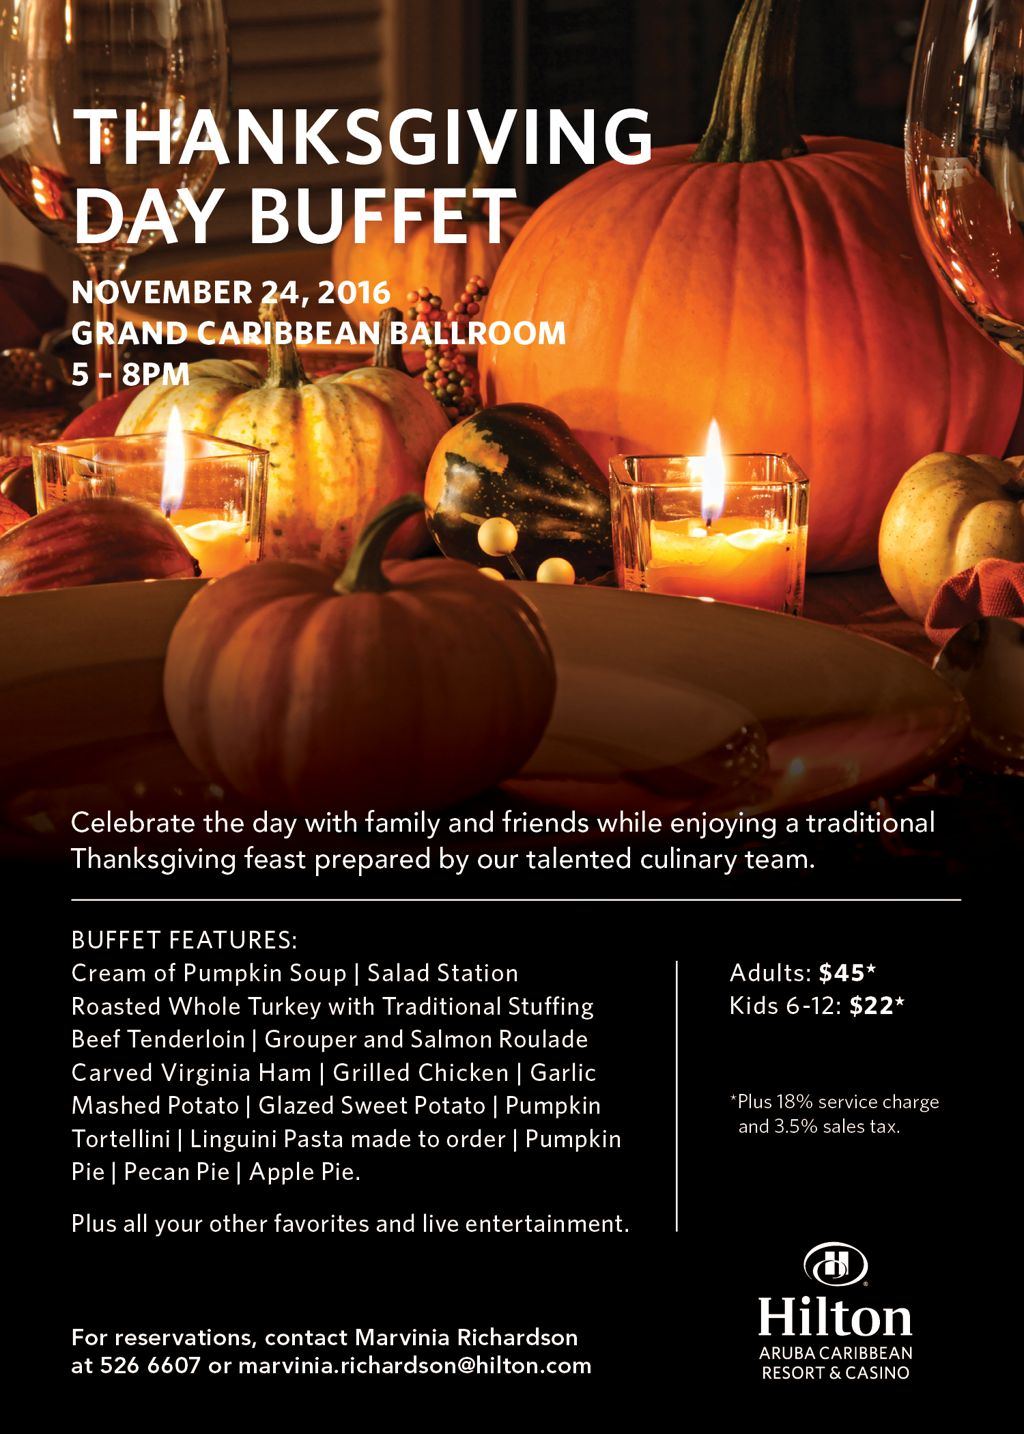 Hilton's Thanksgiving Day Buffet Dinner